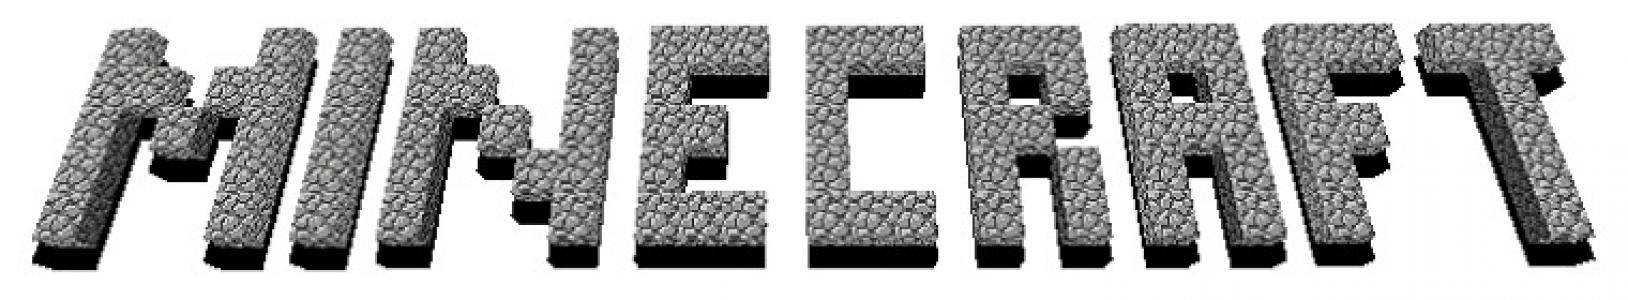 Minecraft: Playstation Vita Edition banner